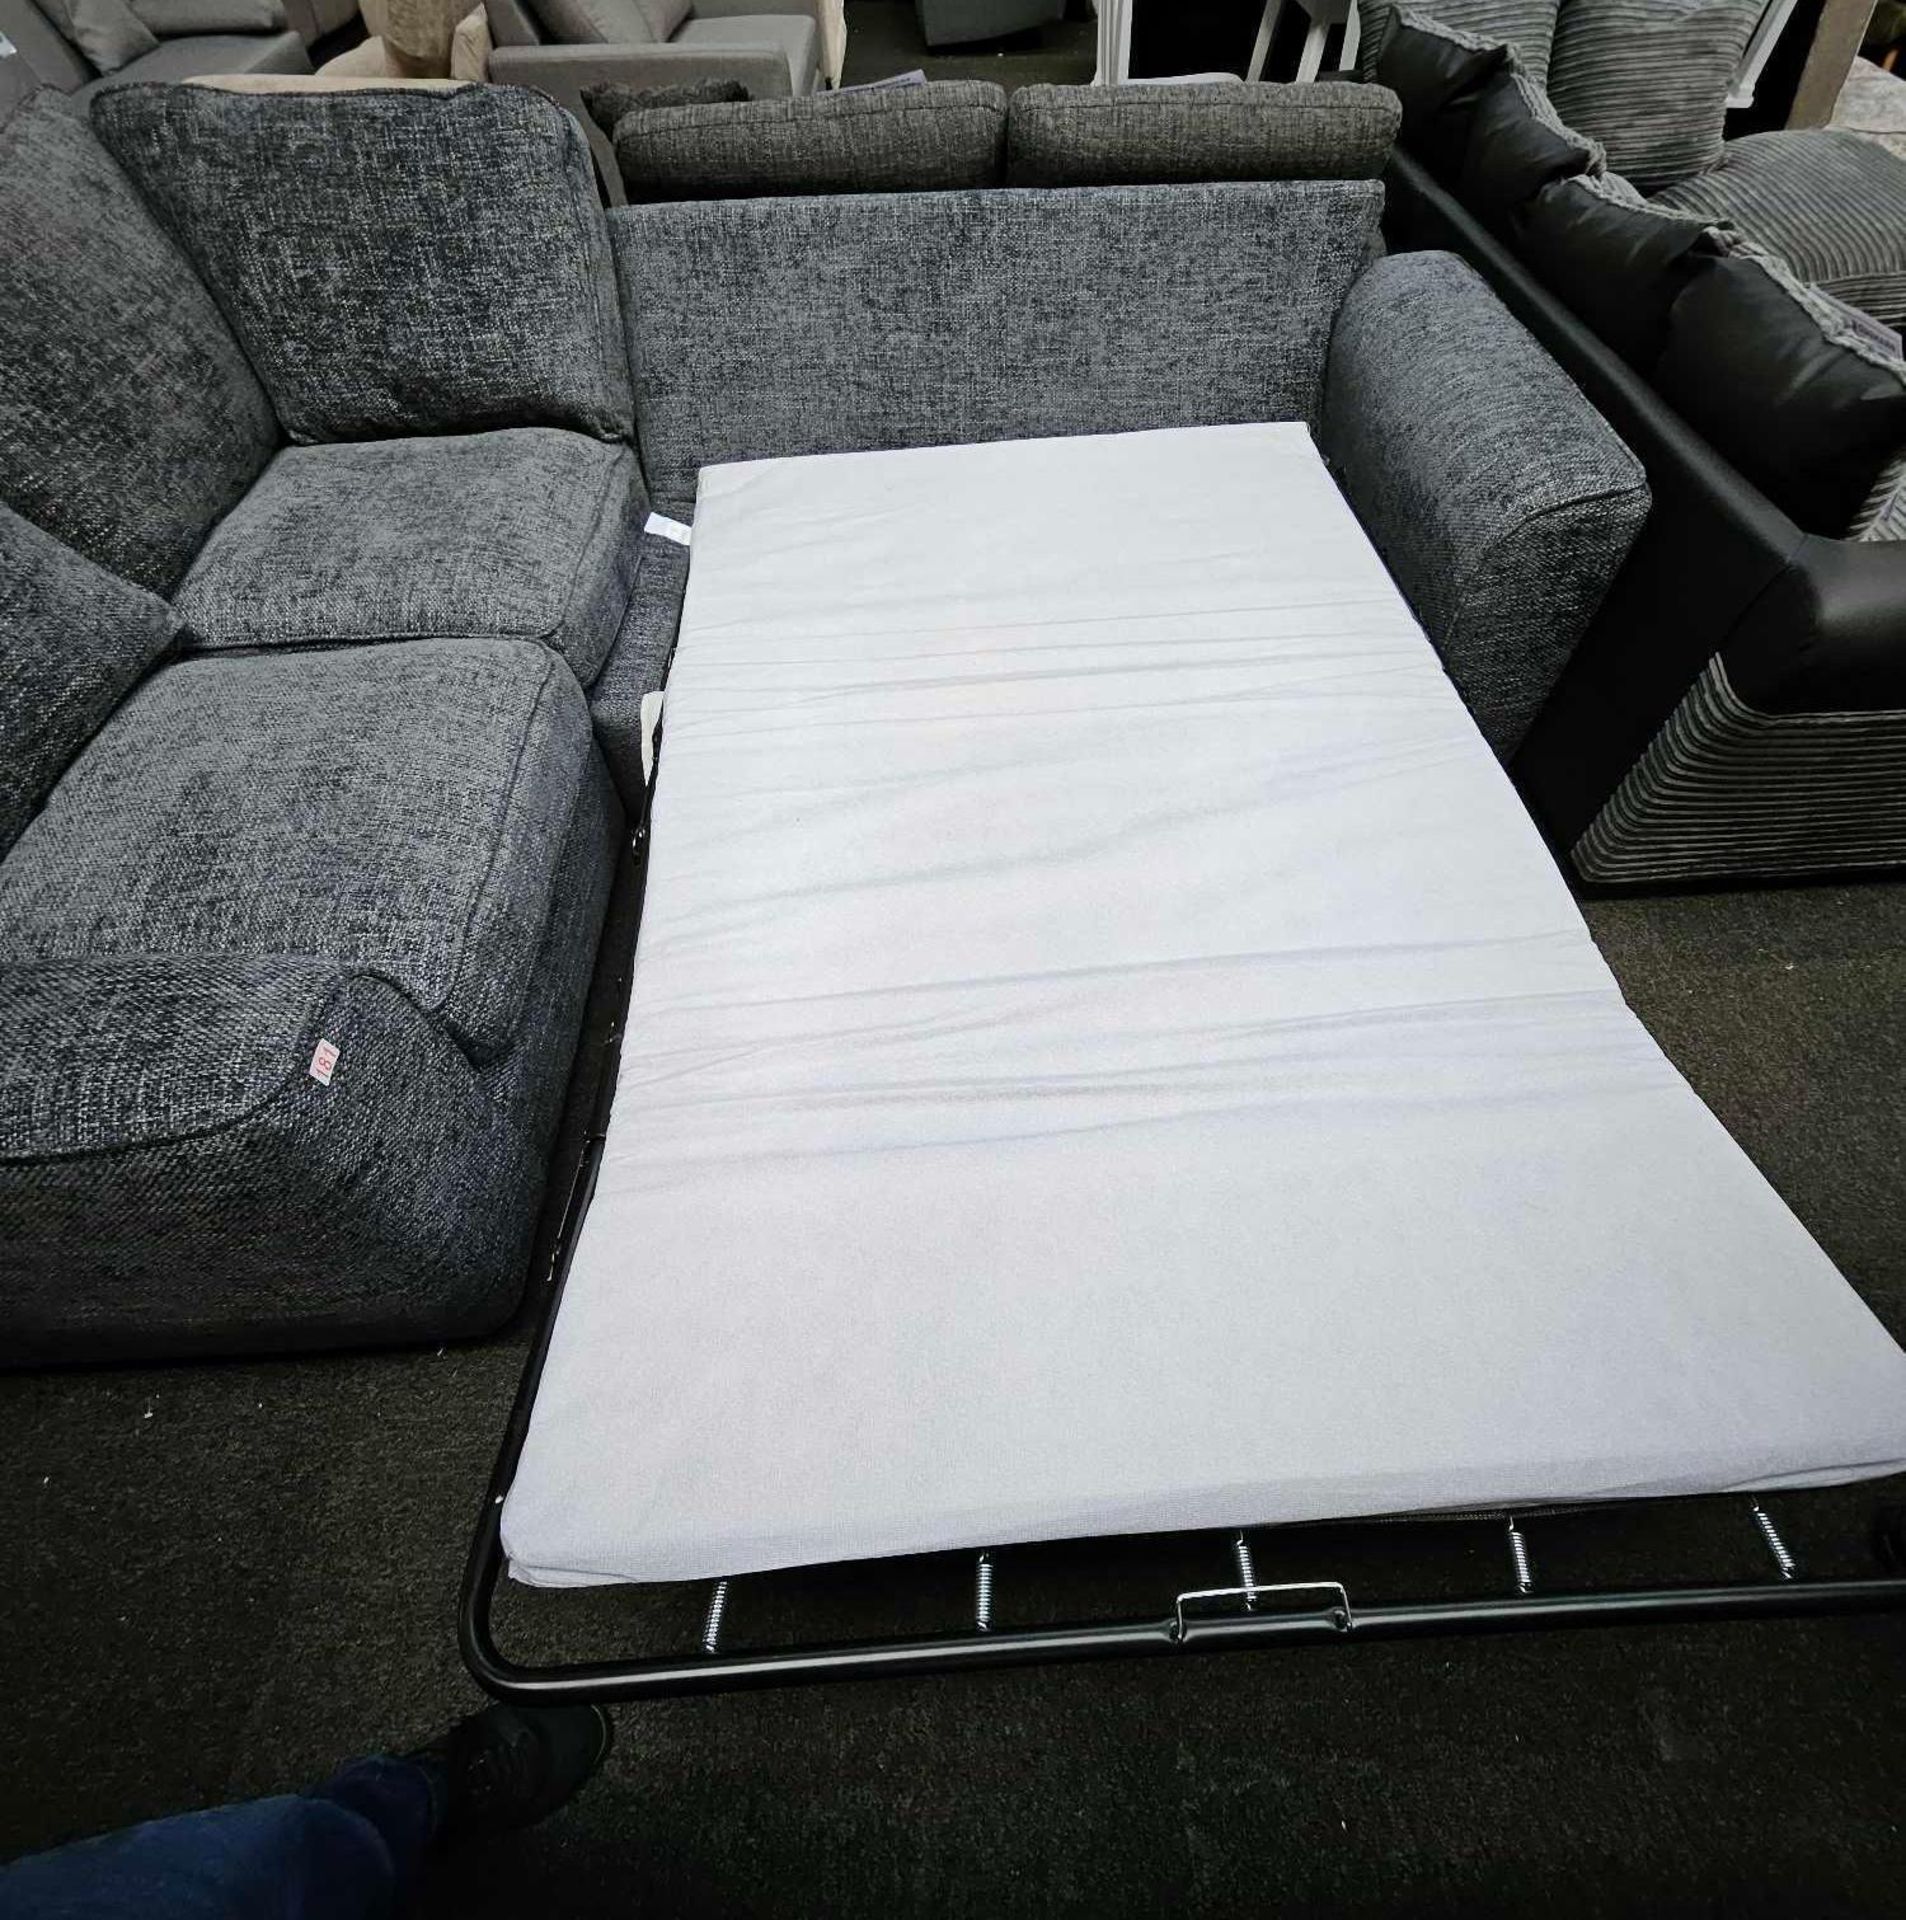 *EX DISPLAY* Furniture village Emilia corner sofa/sofa bed in hopsack dark grey - Image 4 of 5